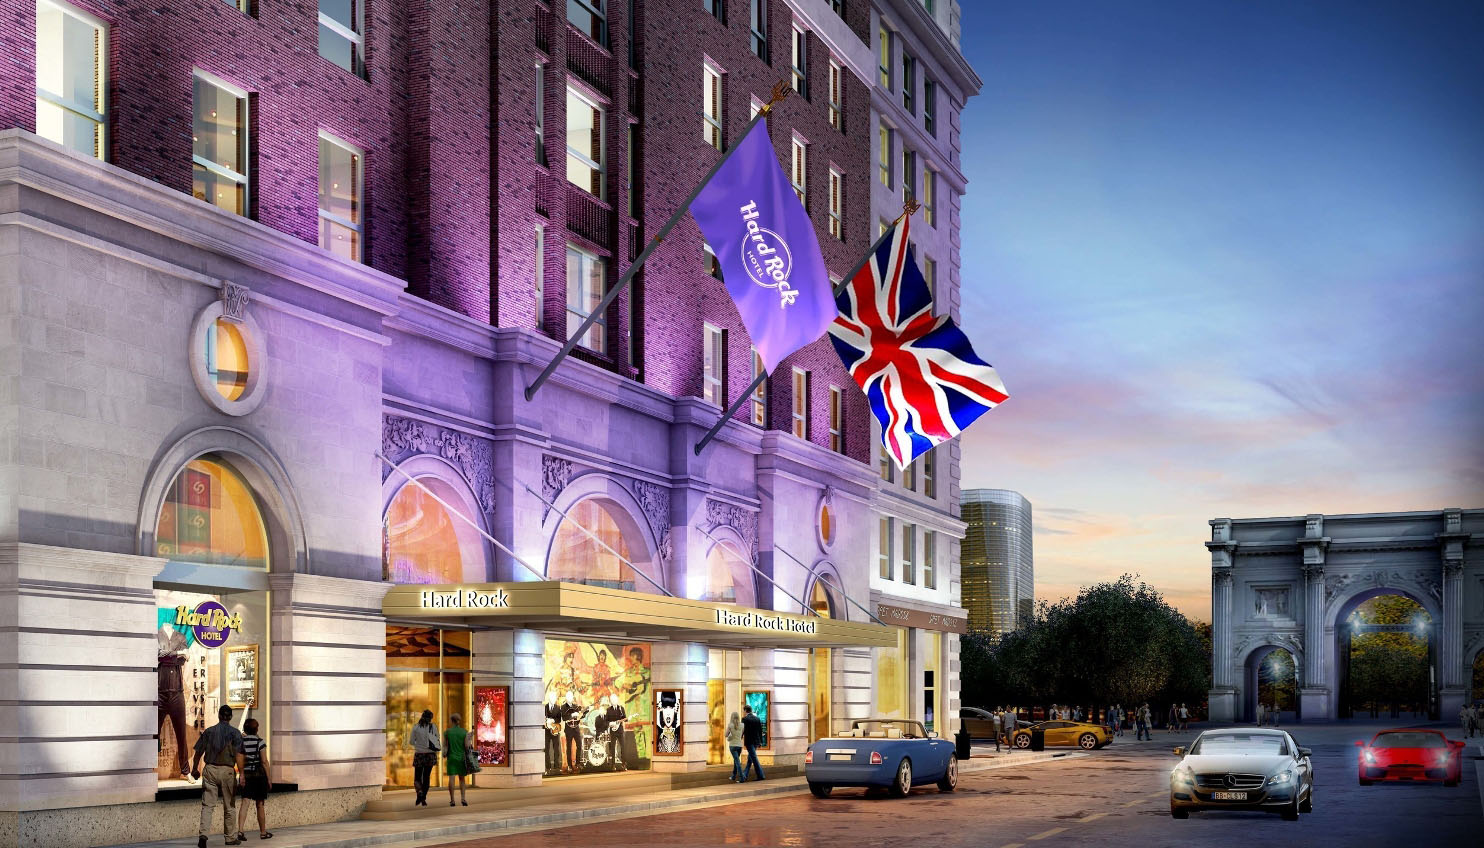 Hard Rock Hotel London announced